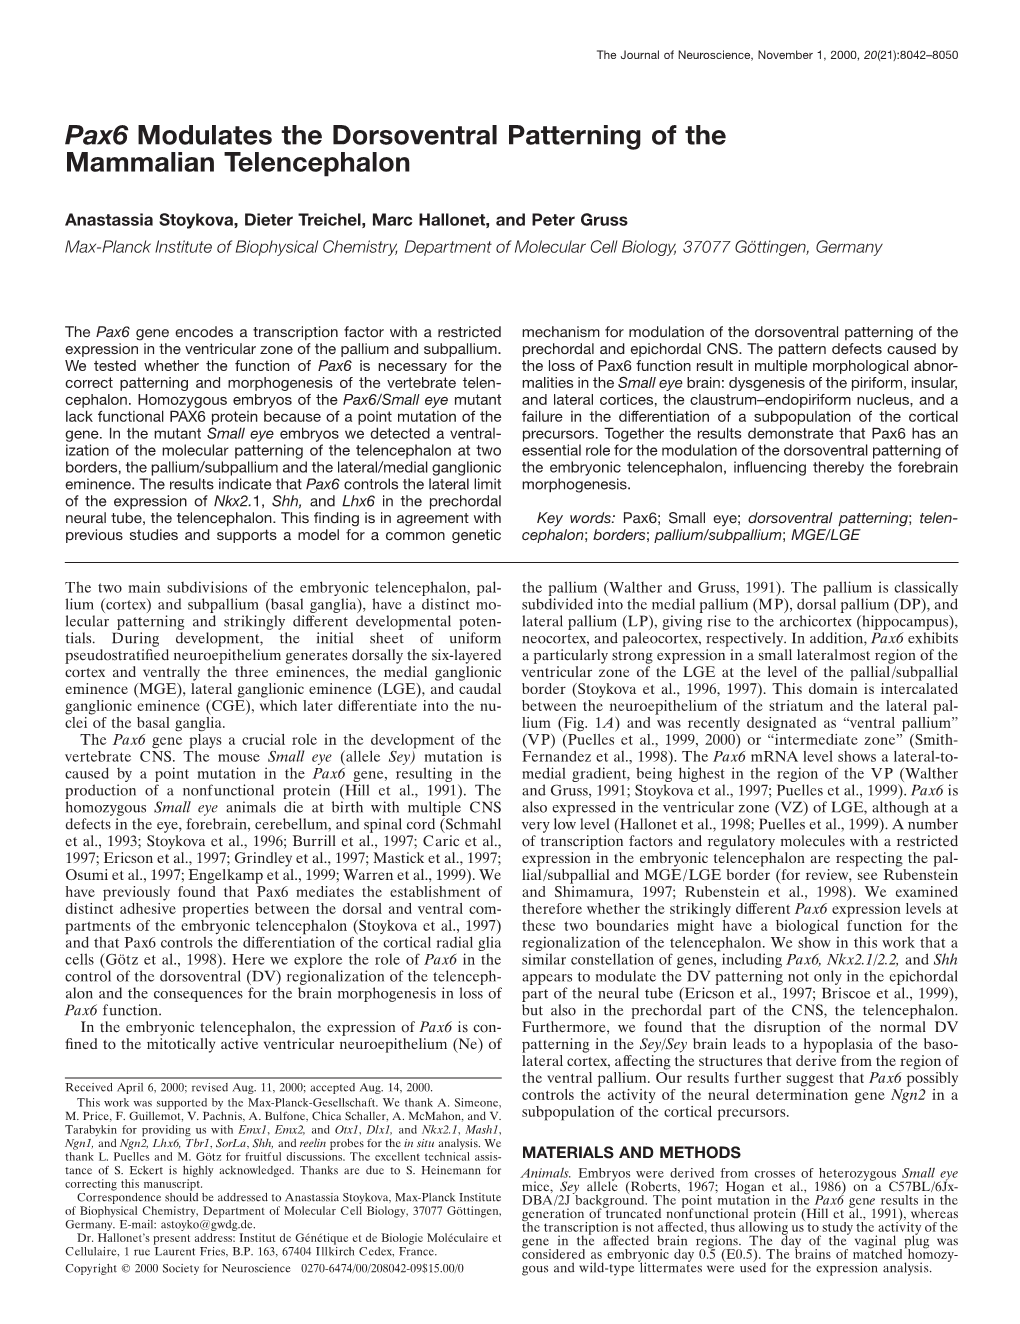 Pax6 Modulates the Dorsoventral Patterning of the Mammalian Telencephalon